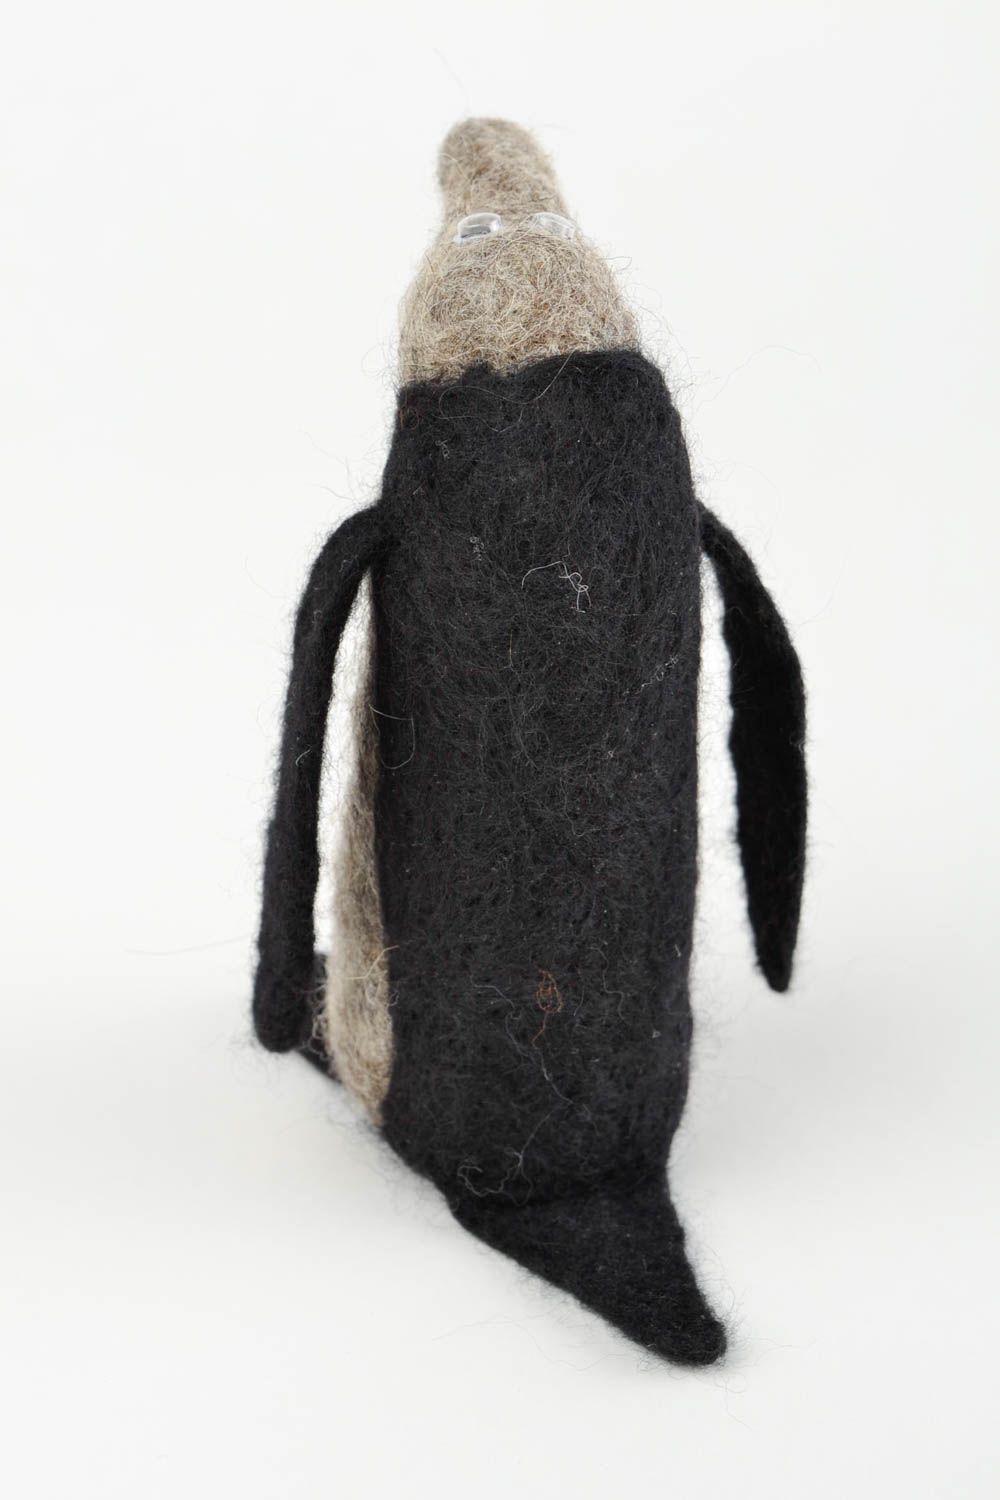 Felt toy handmade soft toy penguin animal figurine handmade gift ideas photo 5